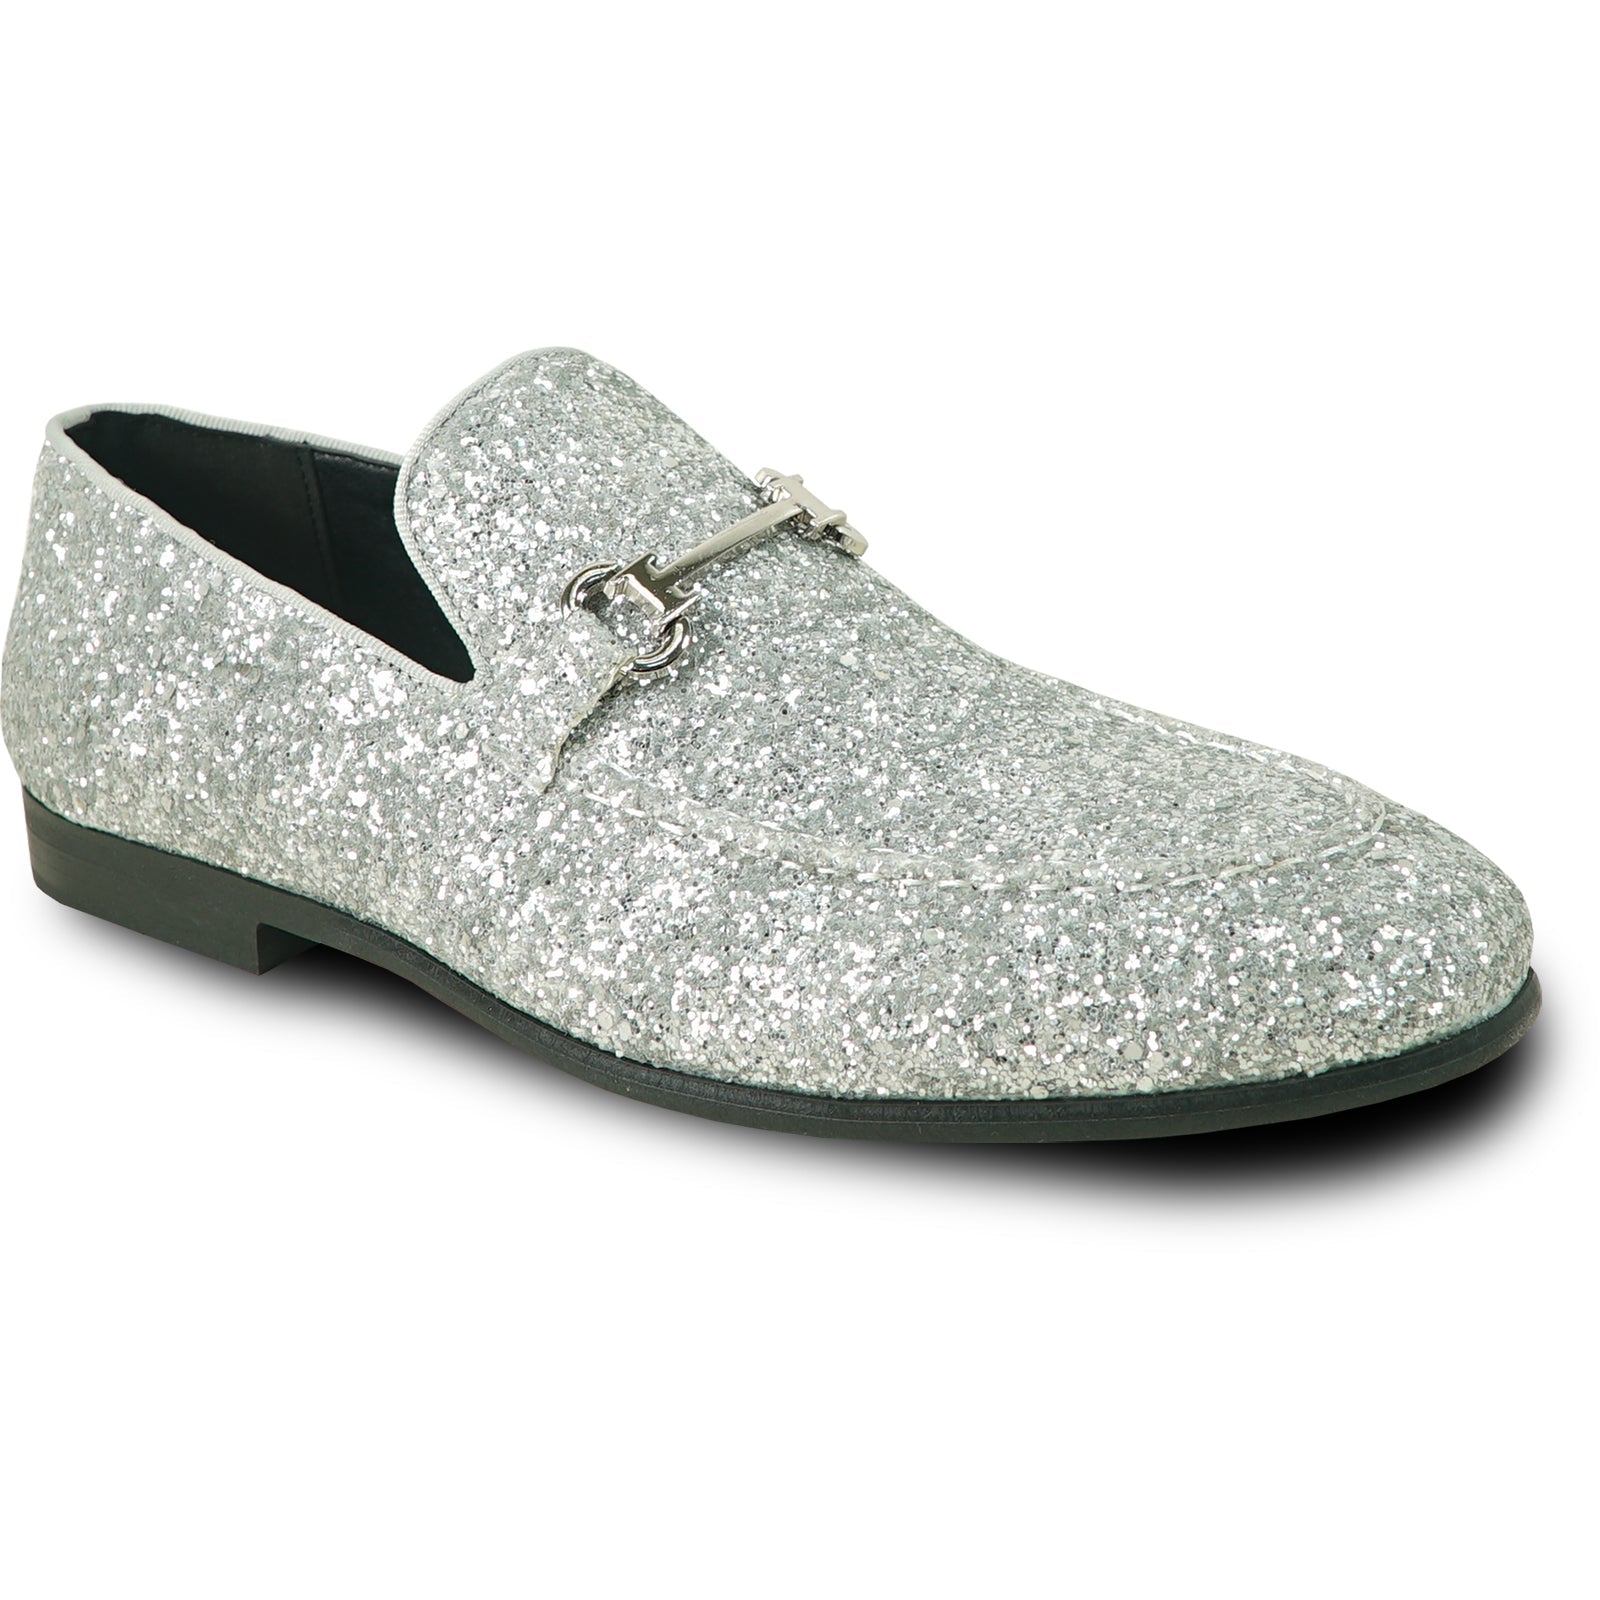 "Silver Grey Sequin Prom Tuxedo Loafers - Modern Men's Glitter Buckle"